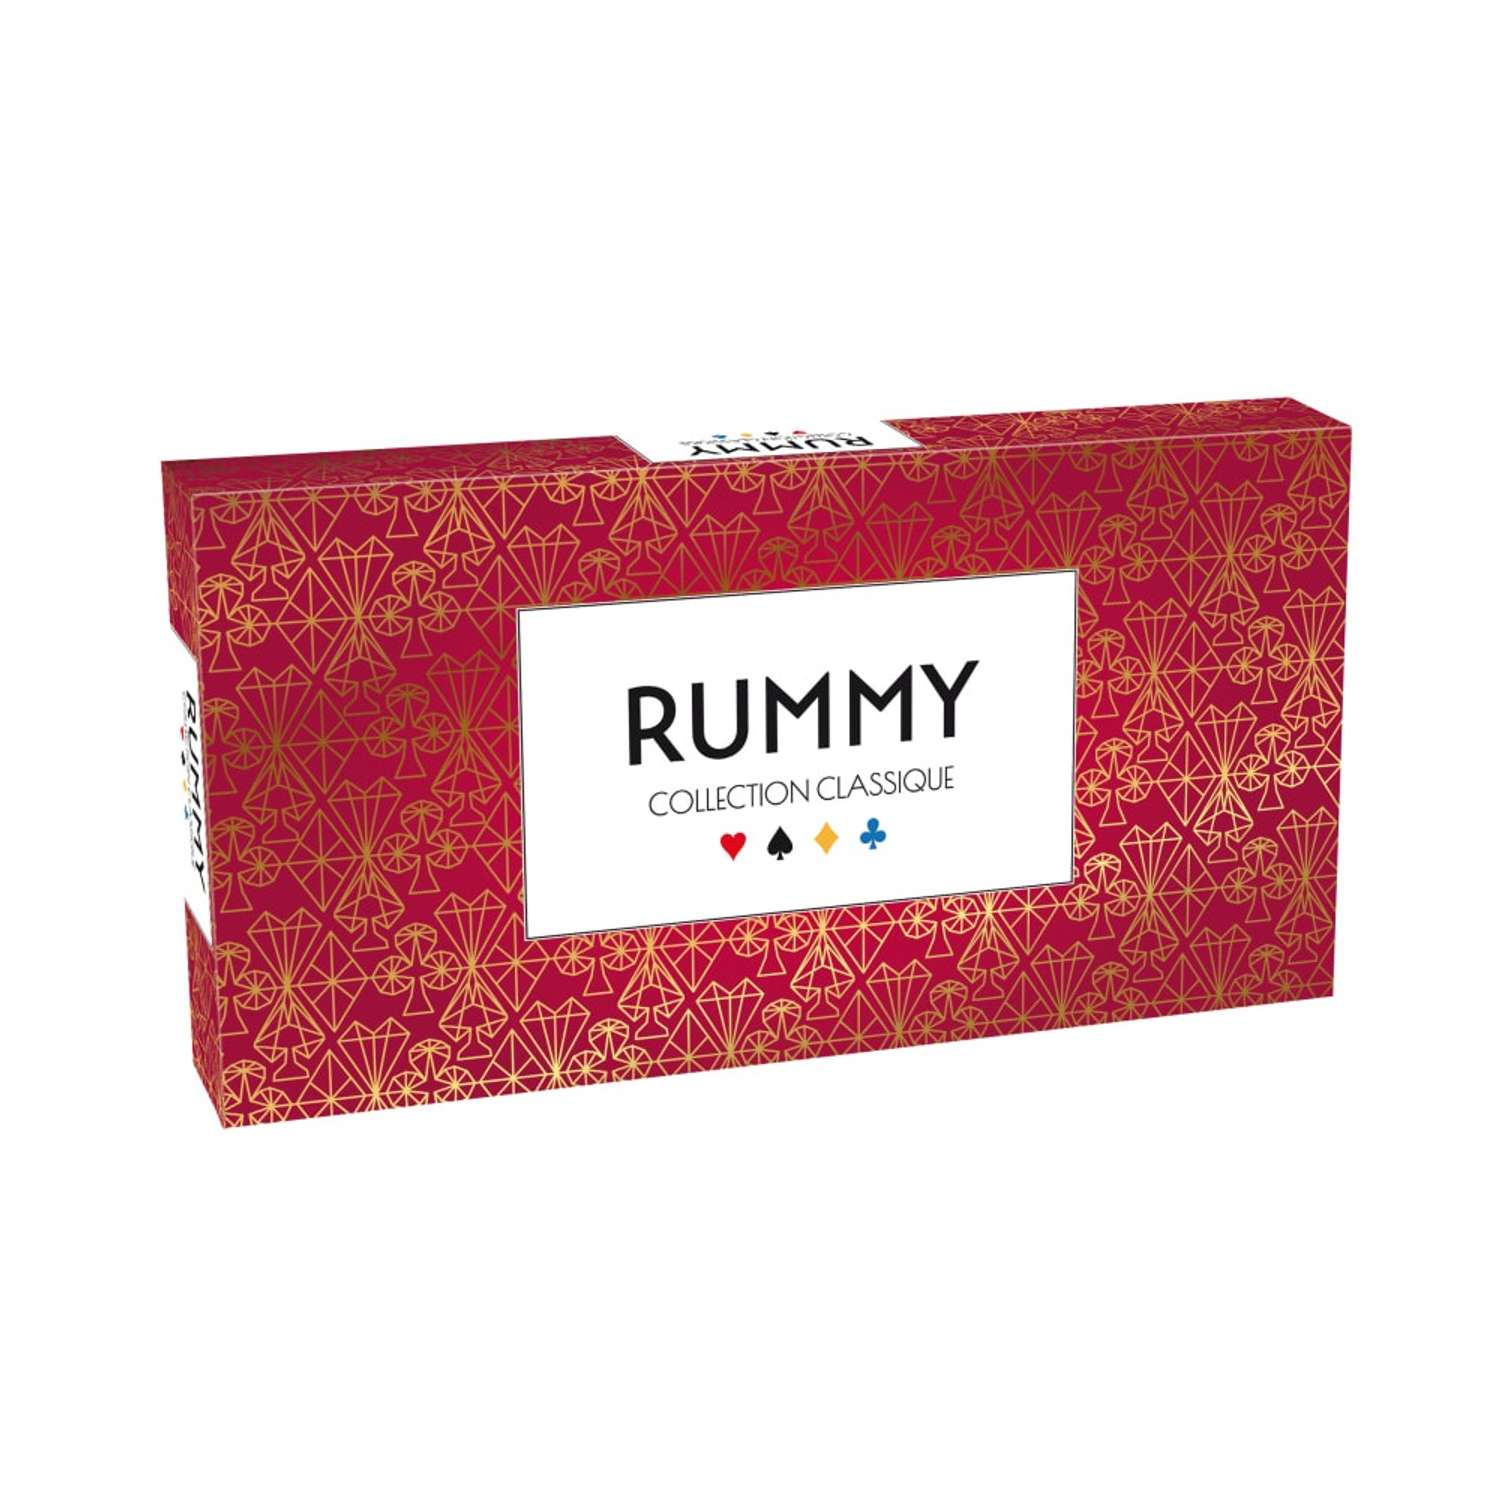 Rummy Румми TACTIC Подарочное издание - фото 1